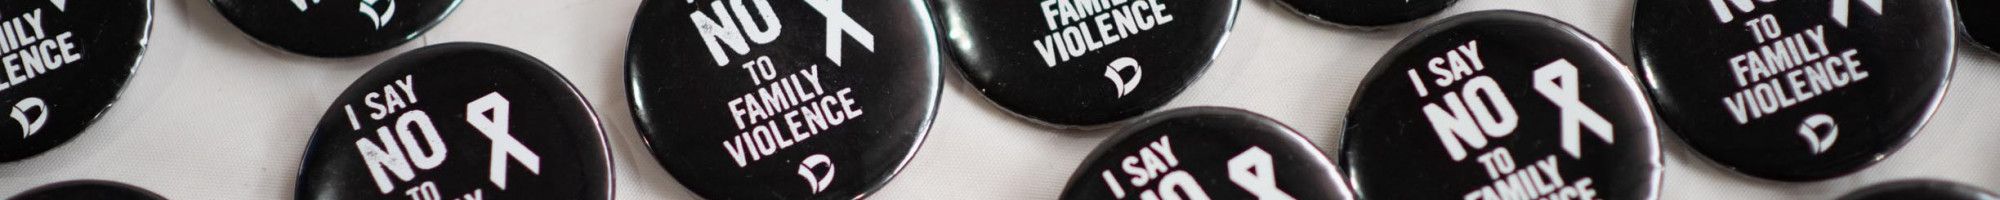 I say no to family violence badges